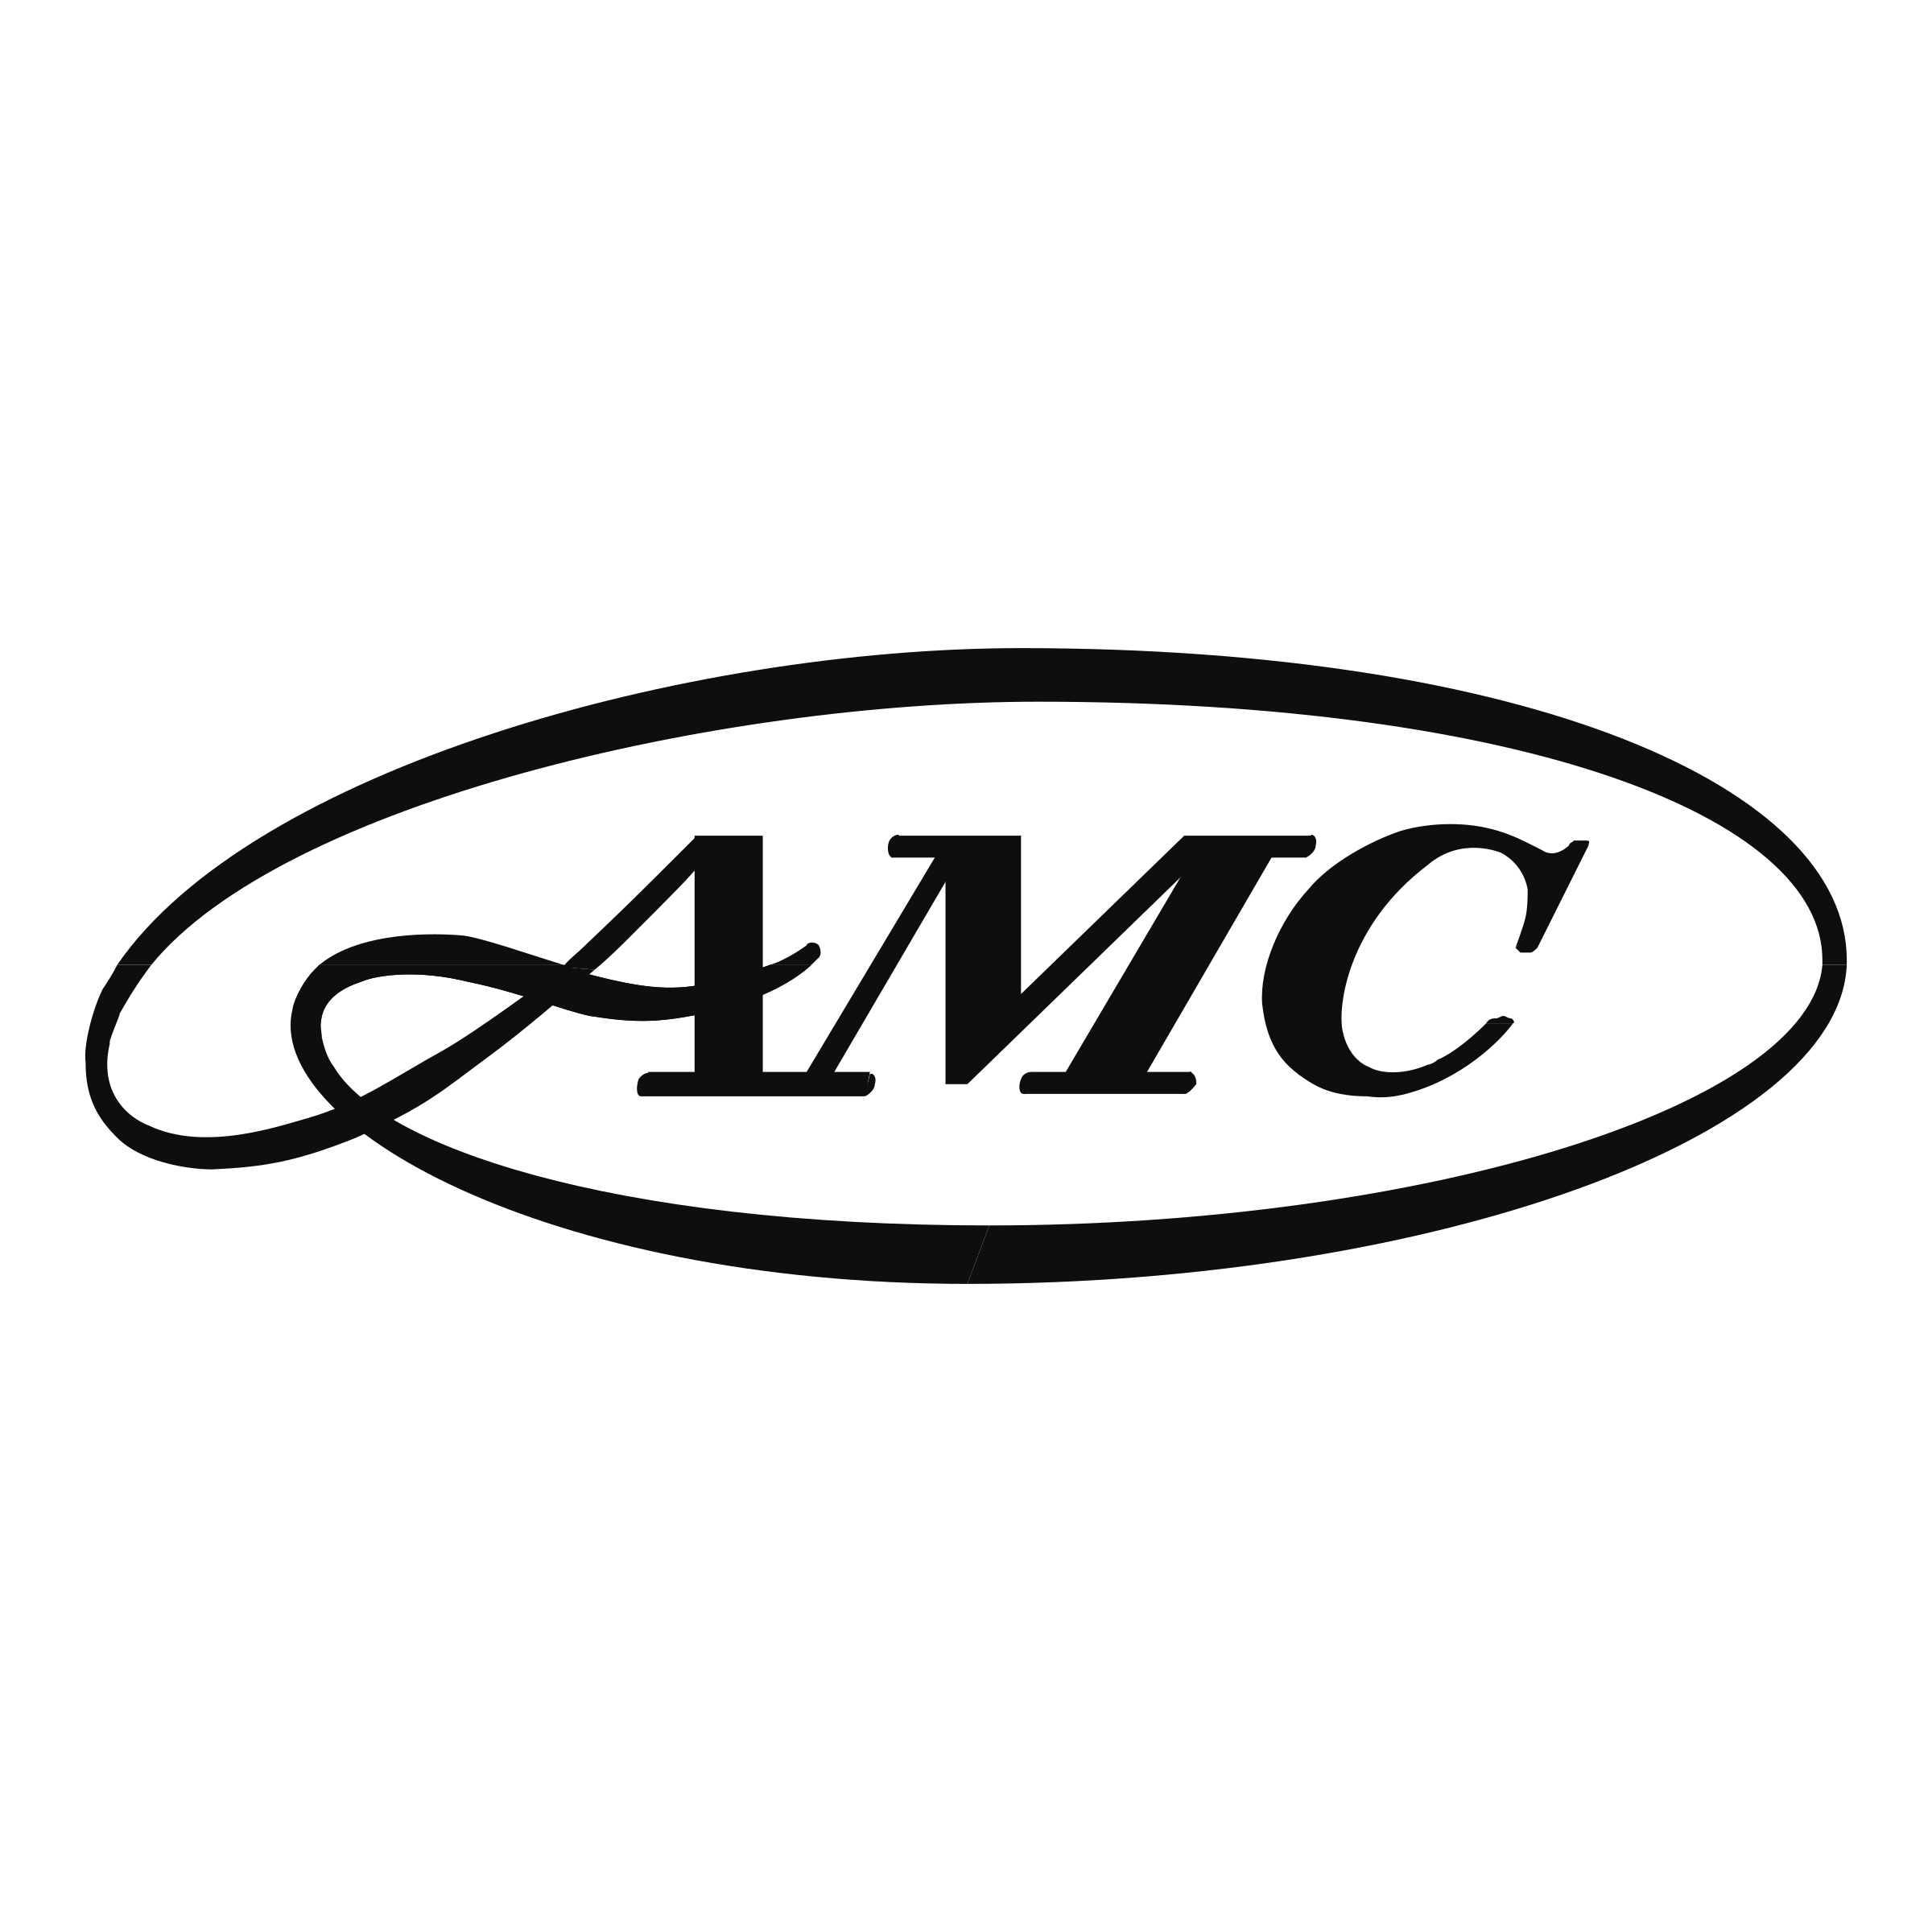 AMC Logo - AMC Logo PNG Transparent & SVG Vector - Freebie Supply